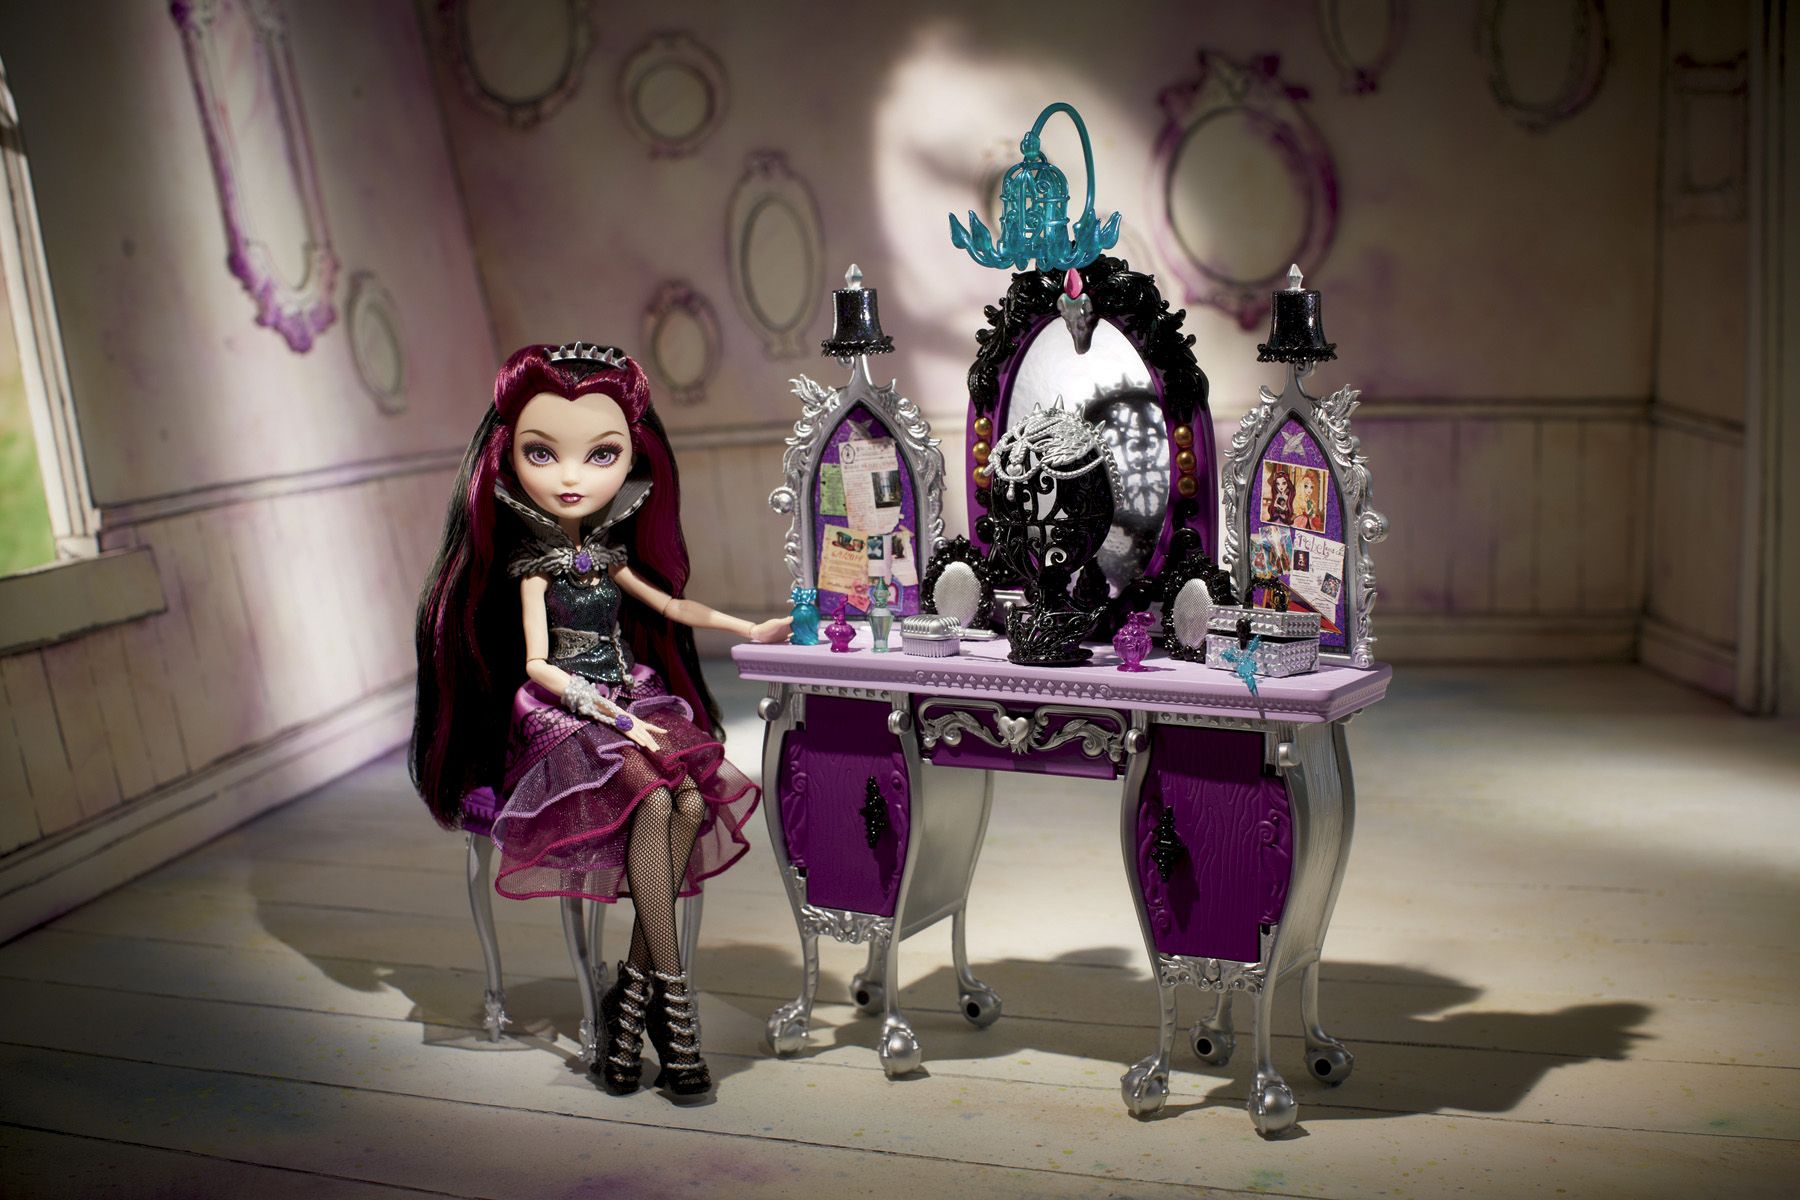  Mattel Ever After High Raven Queen Tea Party Doll